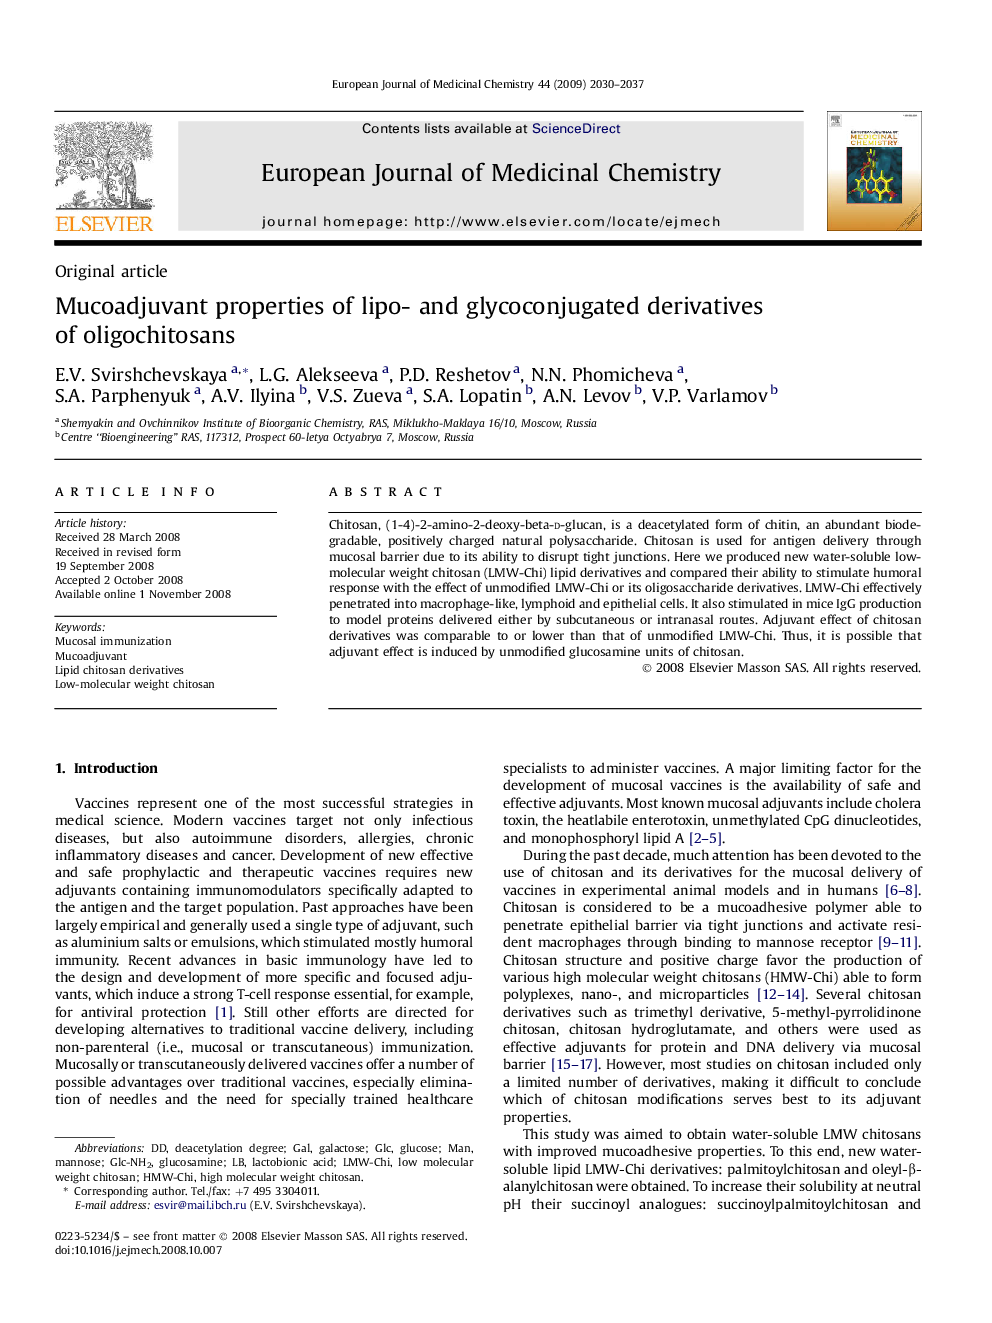 Mucoadjuvant properties of lipo- and glycoconjugated derivatives of oligochitosans